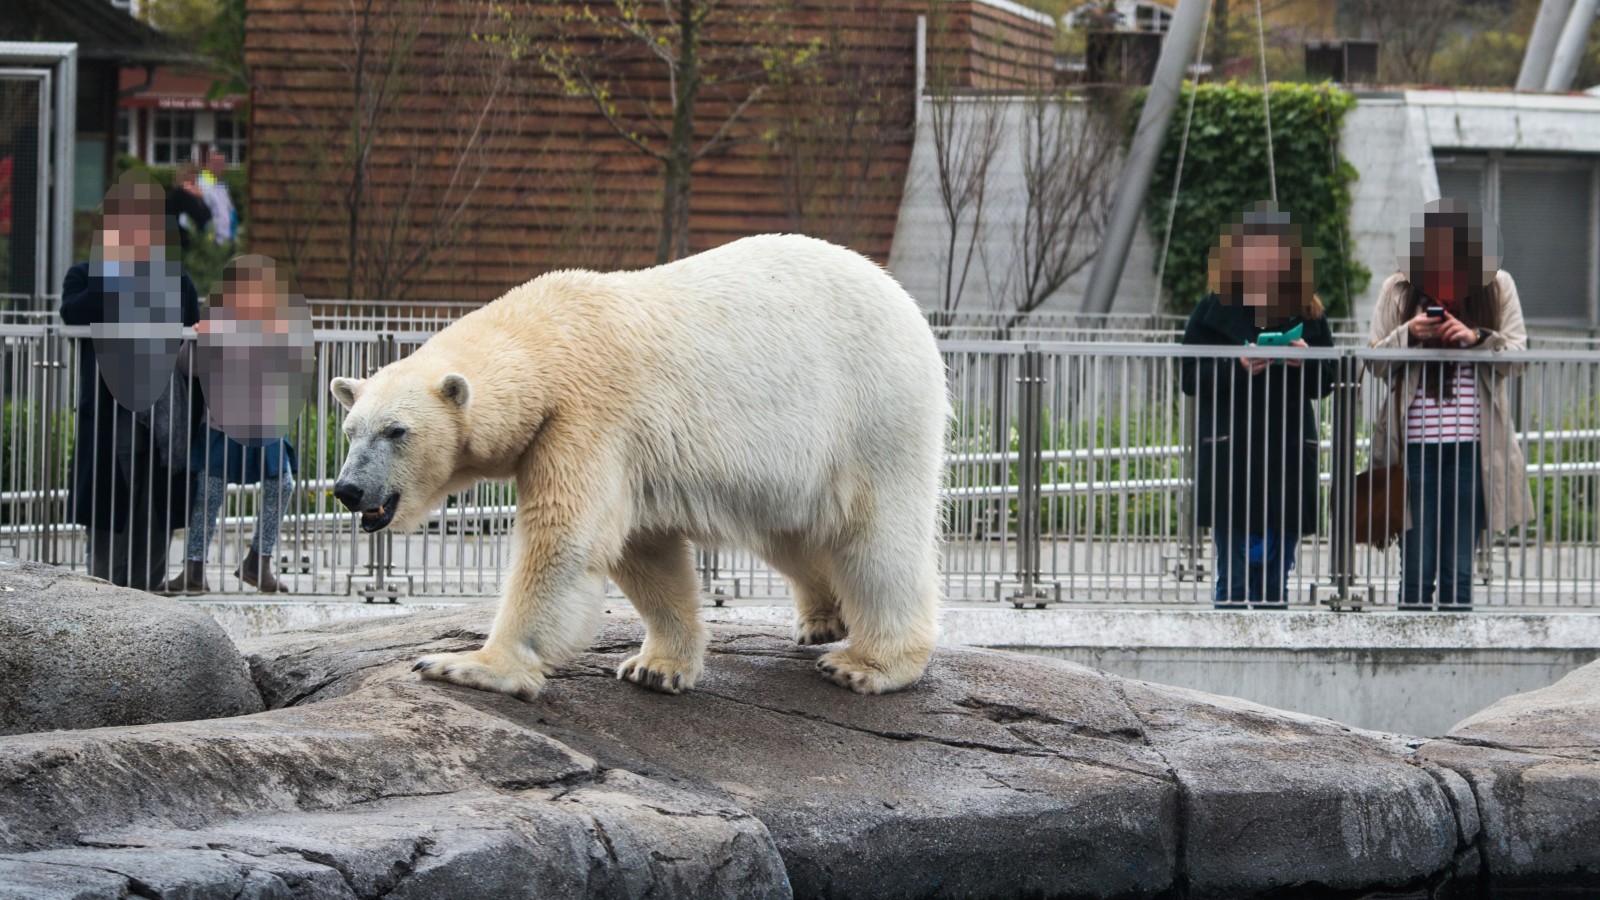 A polar bear behind the bars of it's captive zoo enclosure